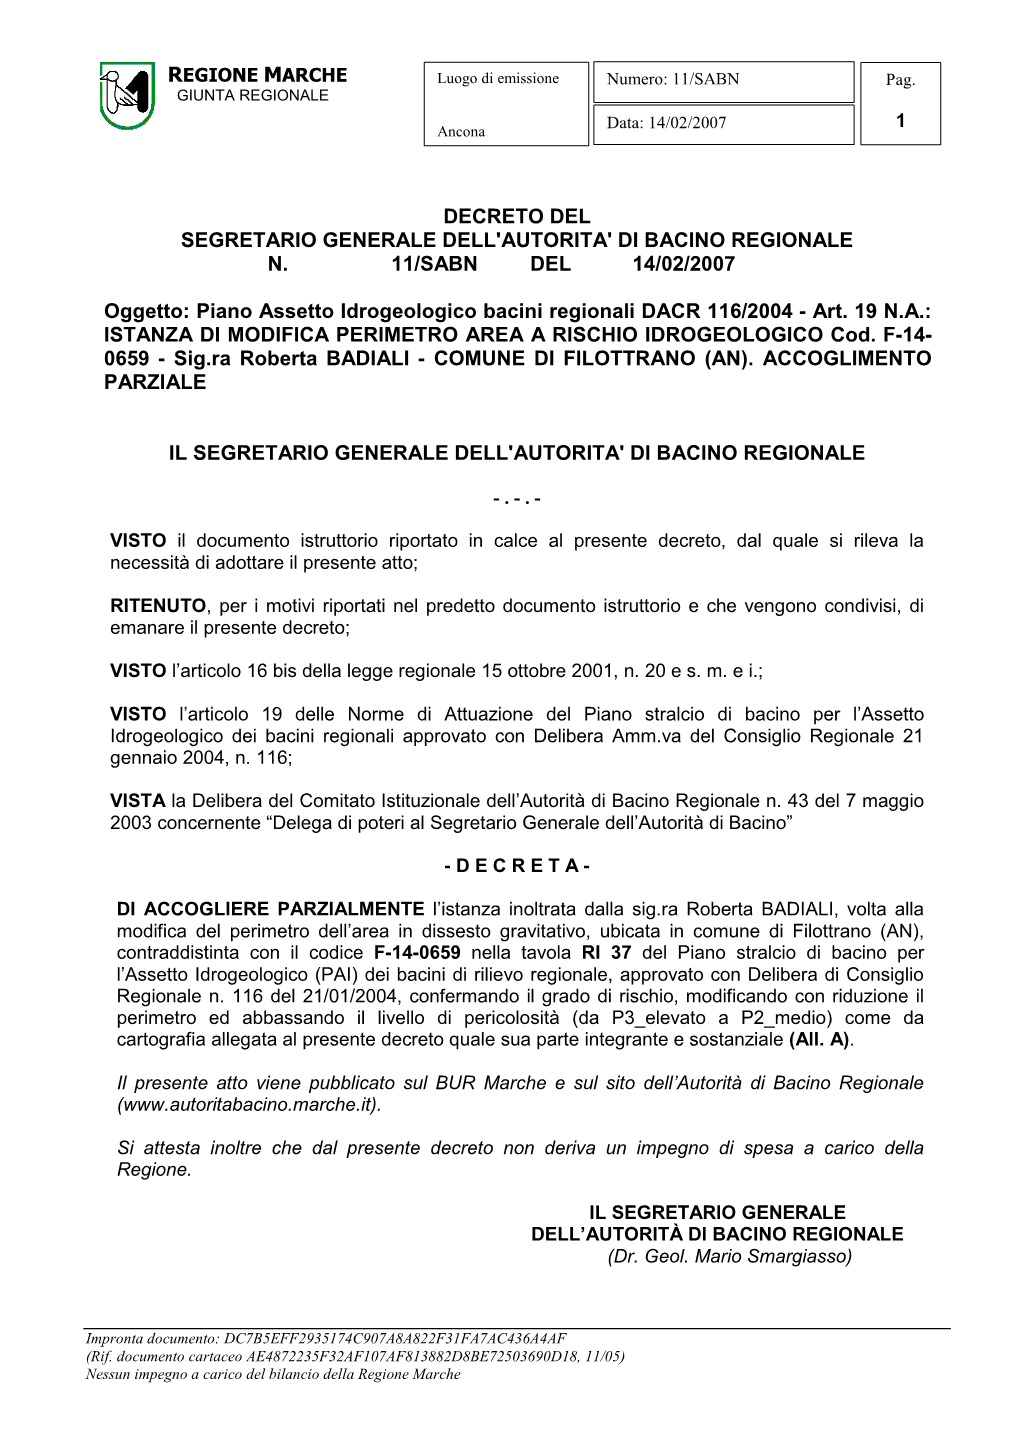 Decreto Del Segretario Generale Dell'autorita' Di Bacino Regionale N